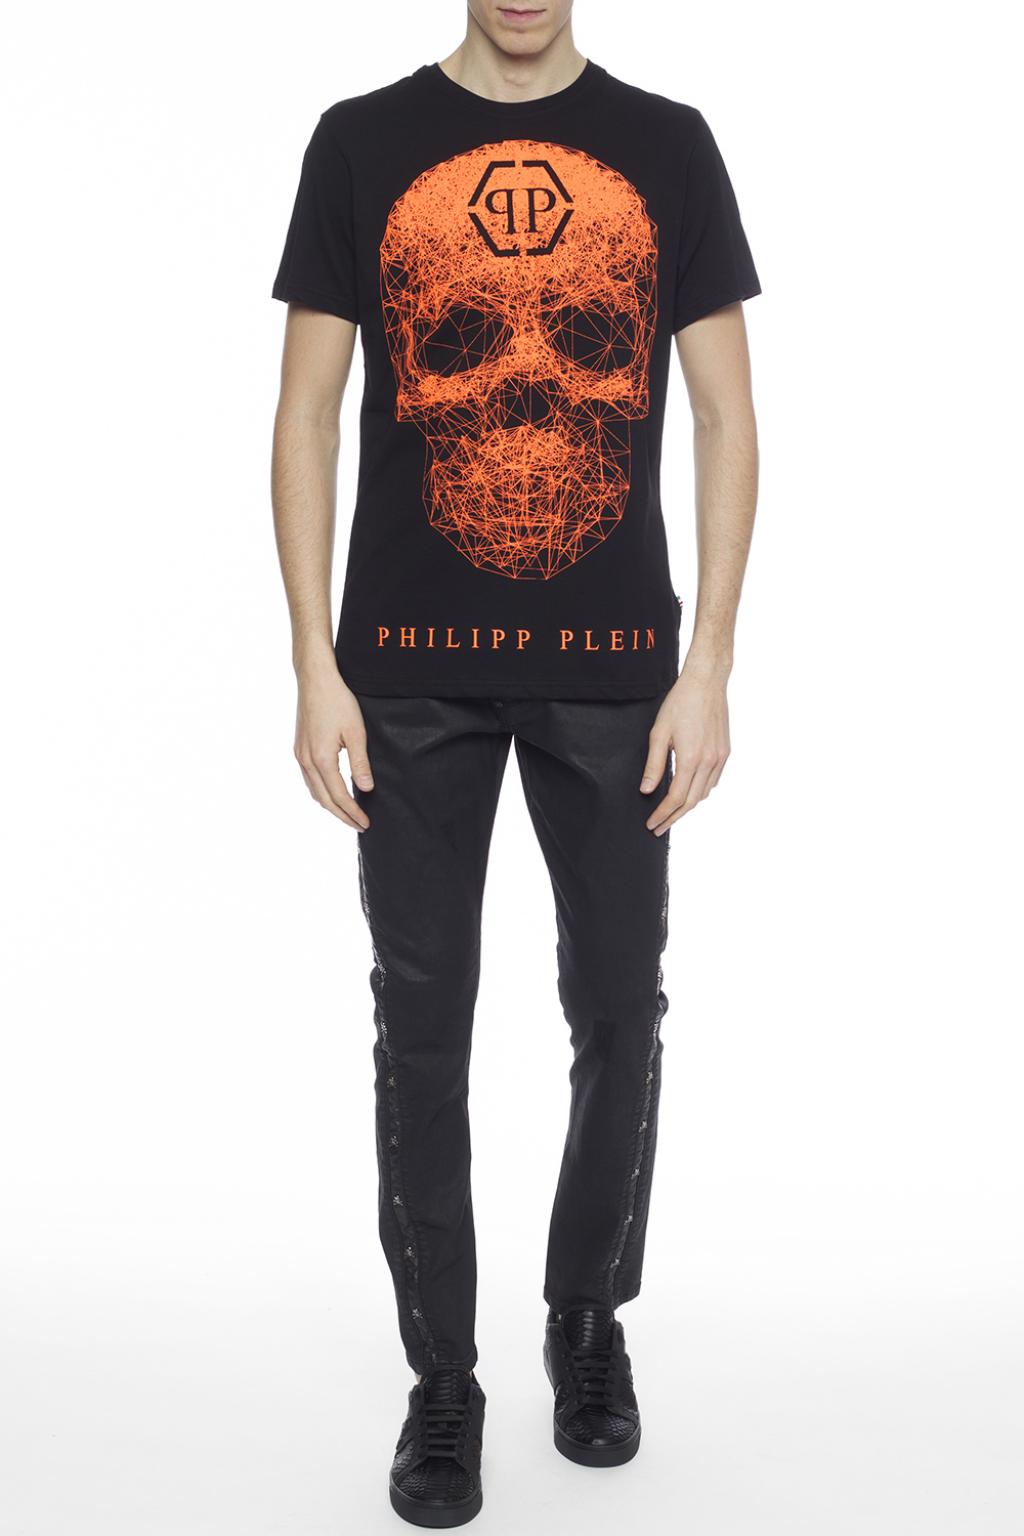 philipp plein orange skull t shirt